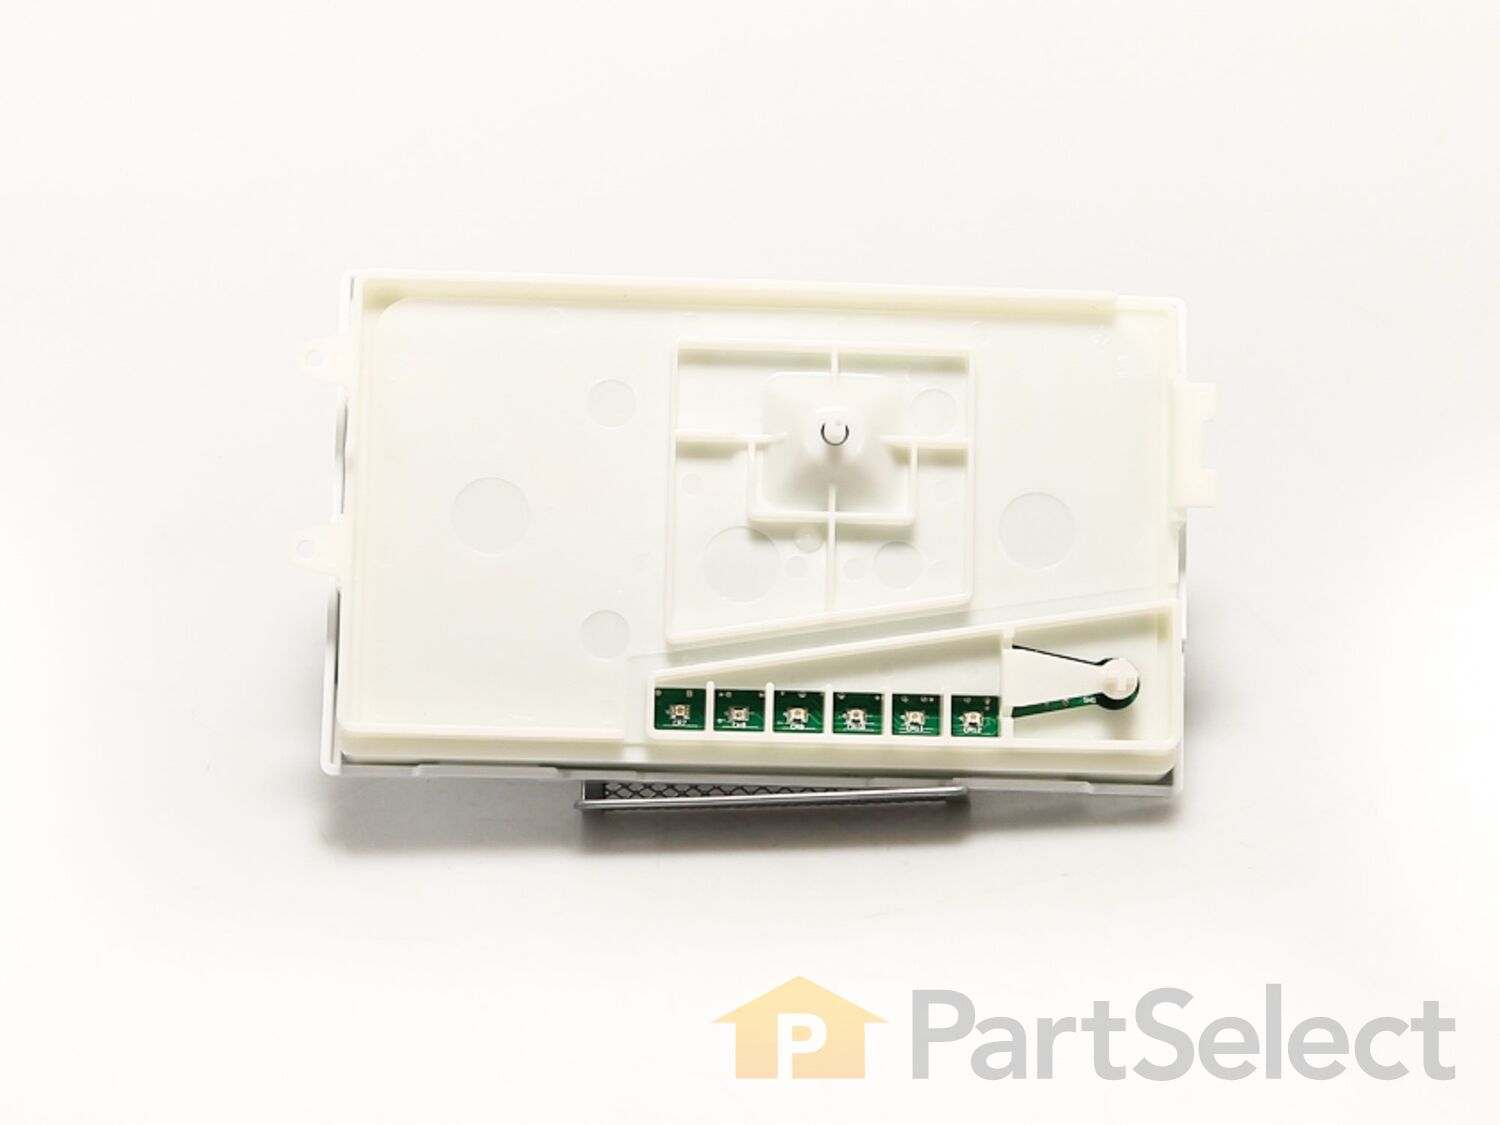 Part OEM Whirlpool W10683781 Washer Electronic Control Board Genuine Original Equipment Manufacturer 